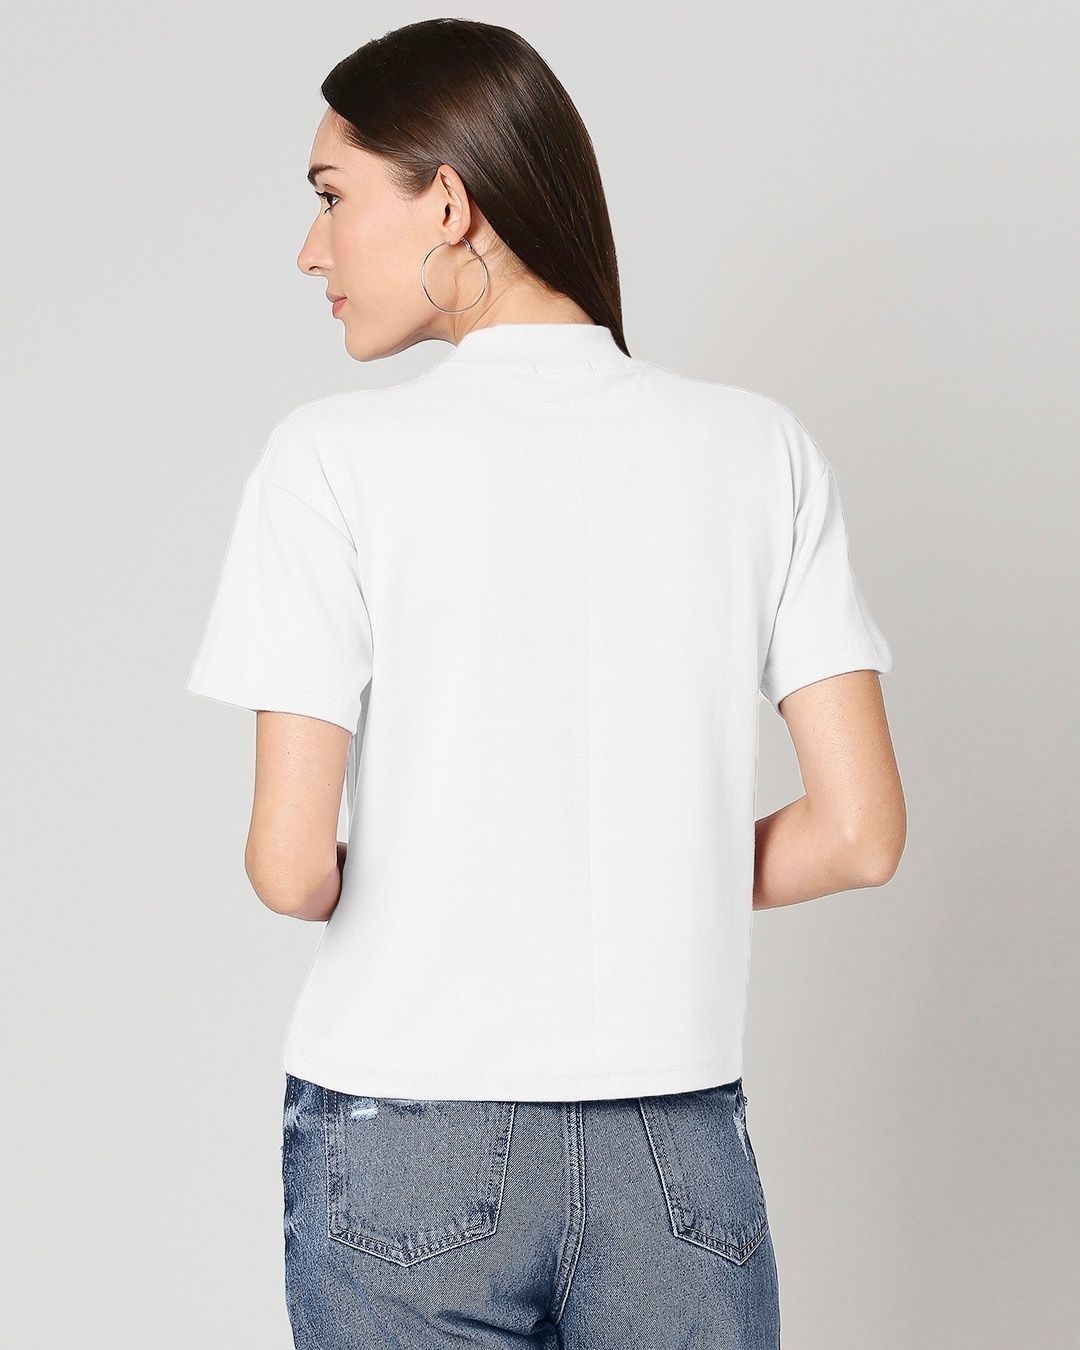 Shop Plain Half Sleeves Turtle Neck T-Shirt-Design